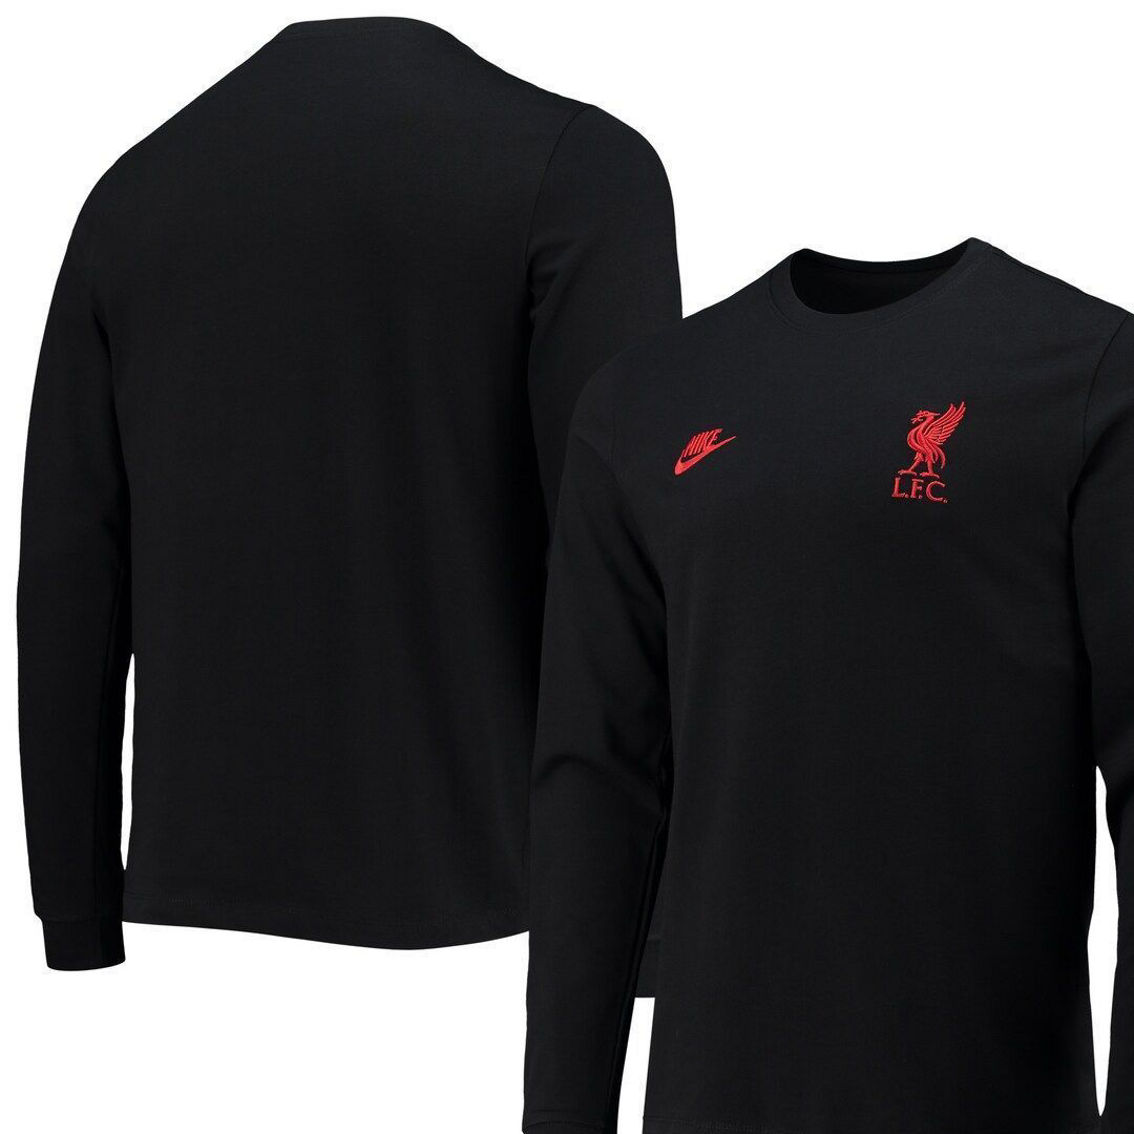 Nike Men's Black Liverpool Futura Travel Long Sleeve T-Shirt - Image 2 of 4